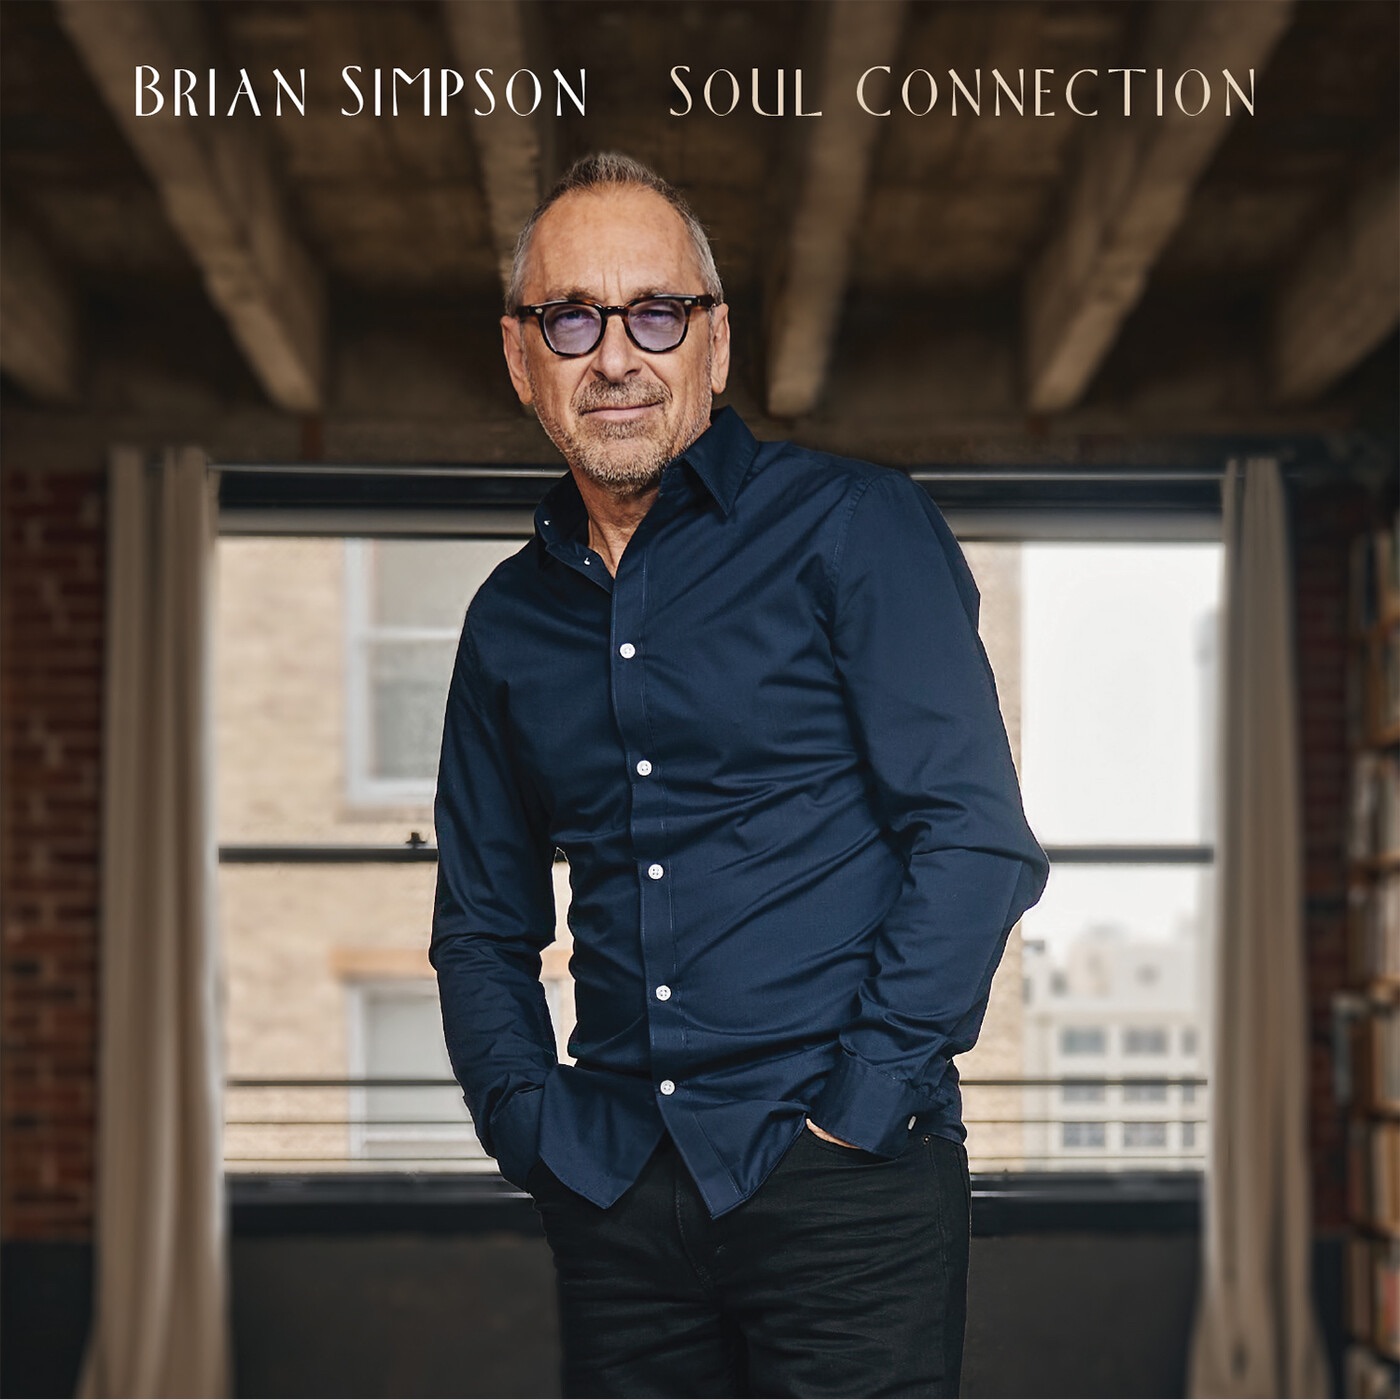 Soul Connection by Brian Simpson, Soul Connection